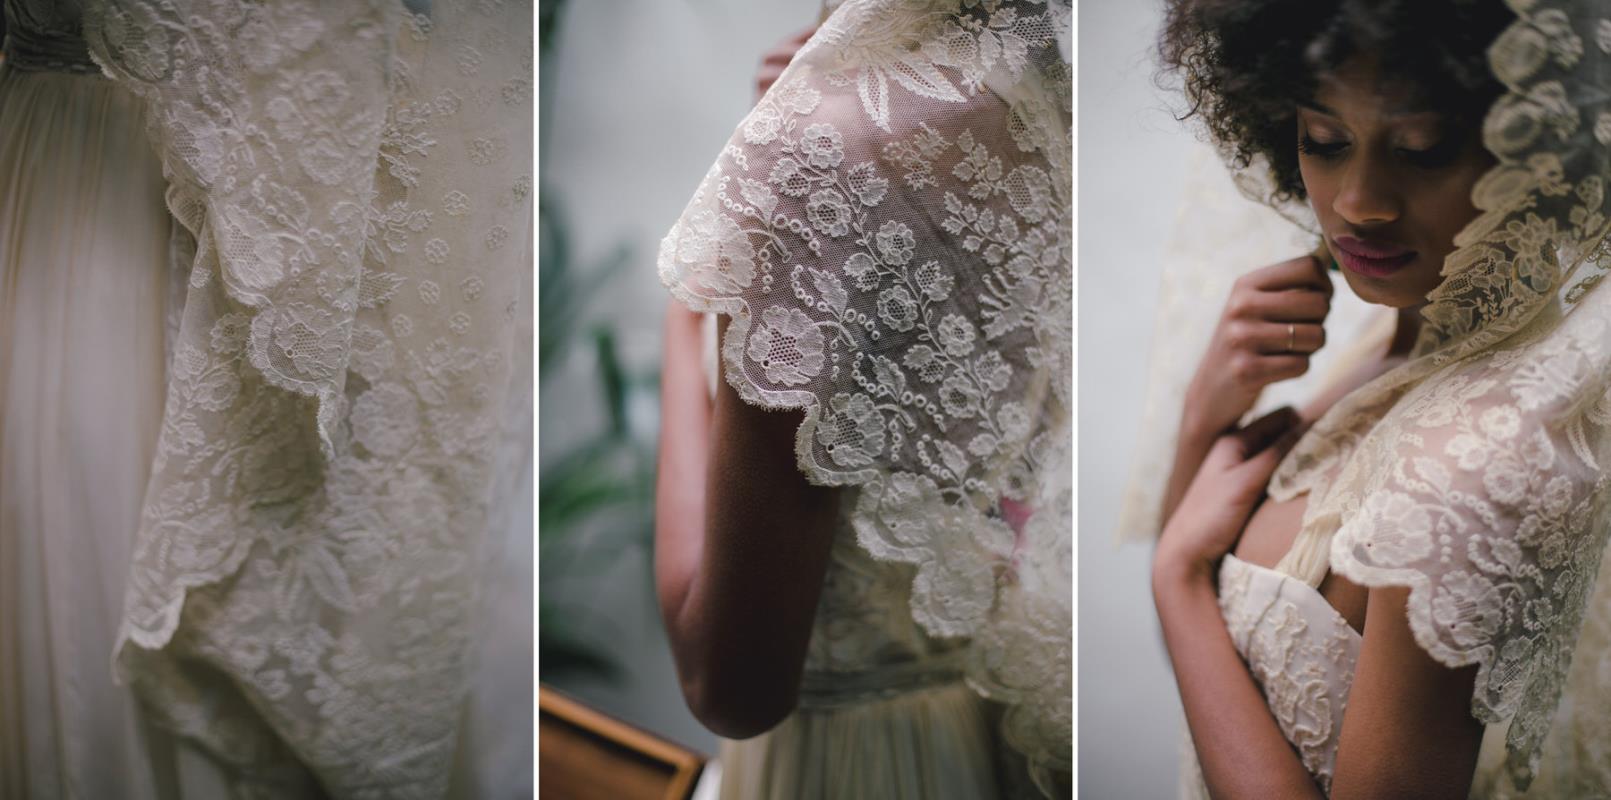 Alternative Weddings Styled Shoot | Laura Stramacchia | Wedding Photography